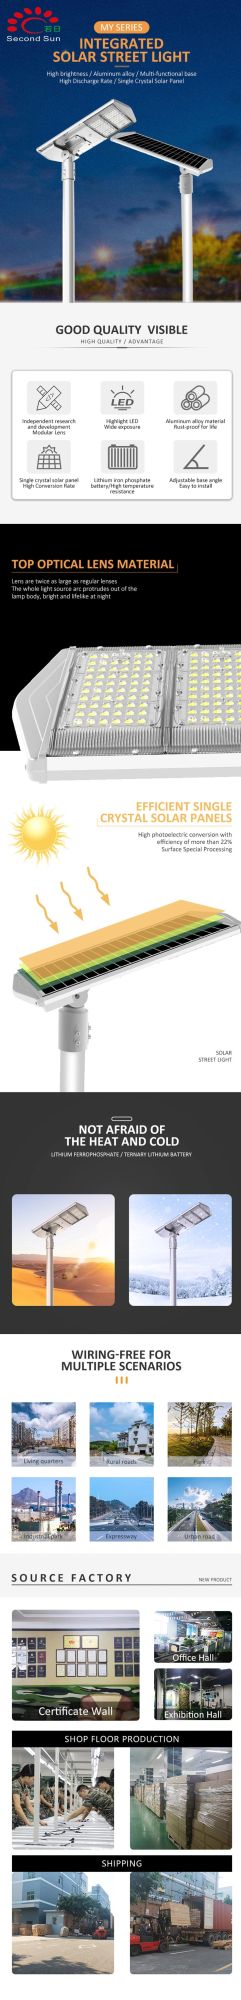 100W IP66 Solar Outdoor Light Efficiency LED Solar Street Light with Motion Sensor